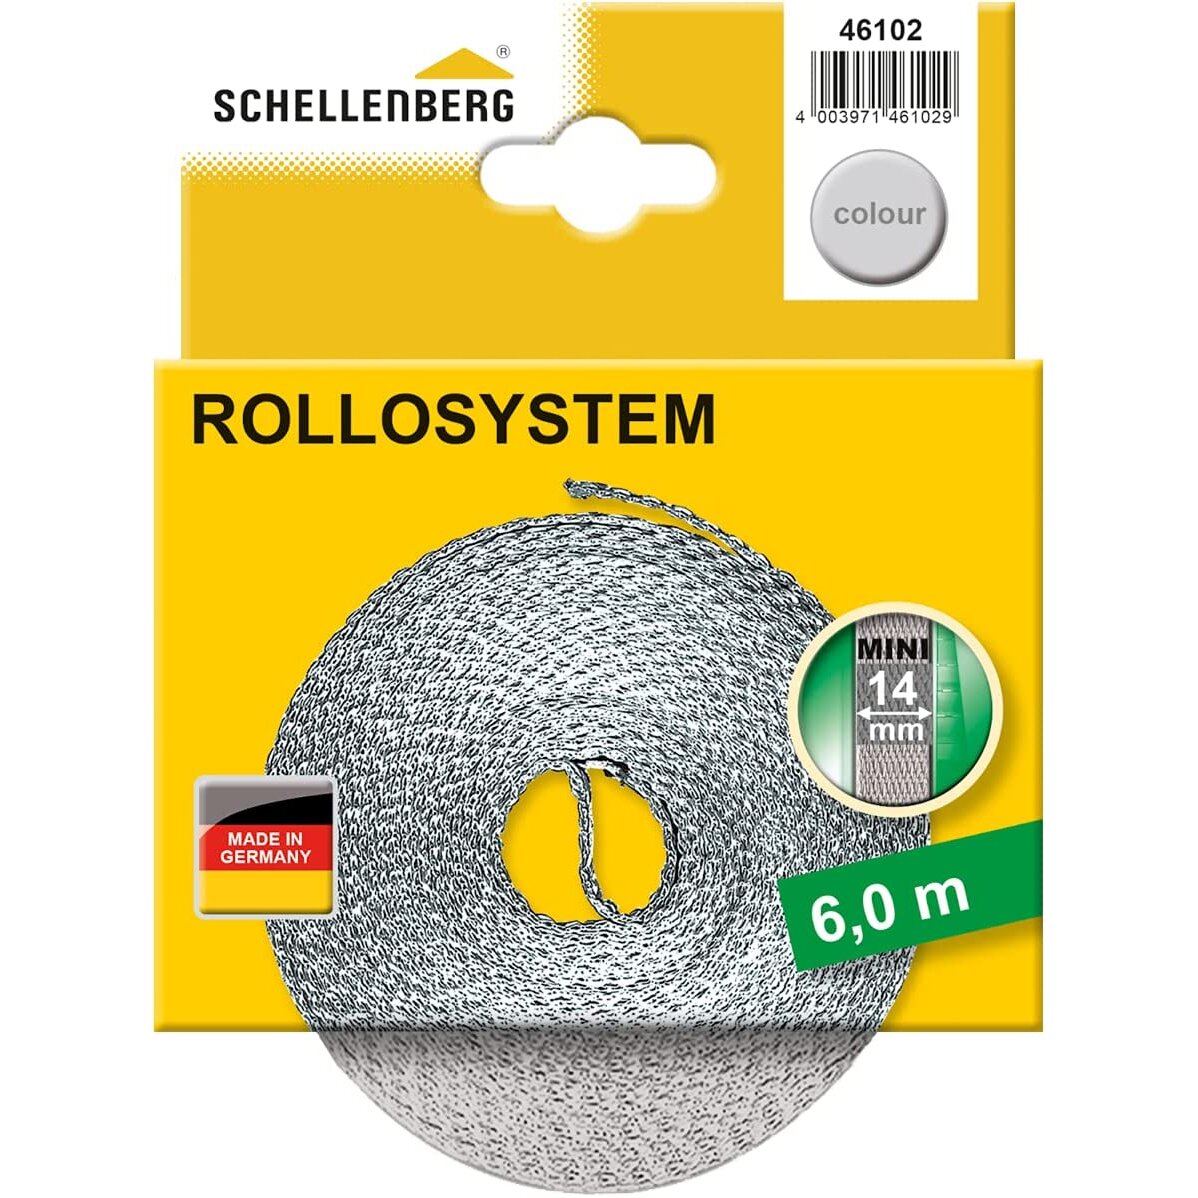 Schellenberg 44501?Roller Shutter Strap for Window (Width: 14?mm, Mini System: 4.5?m), Grey, 46102